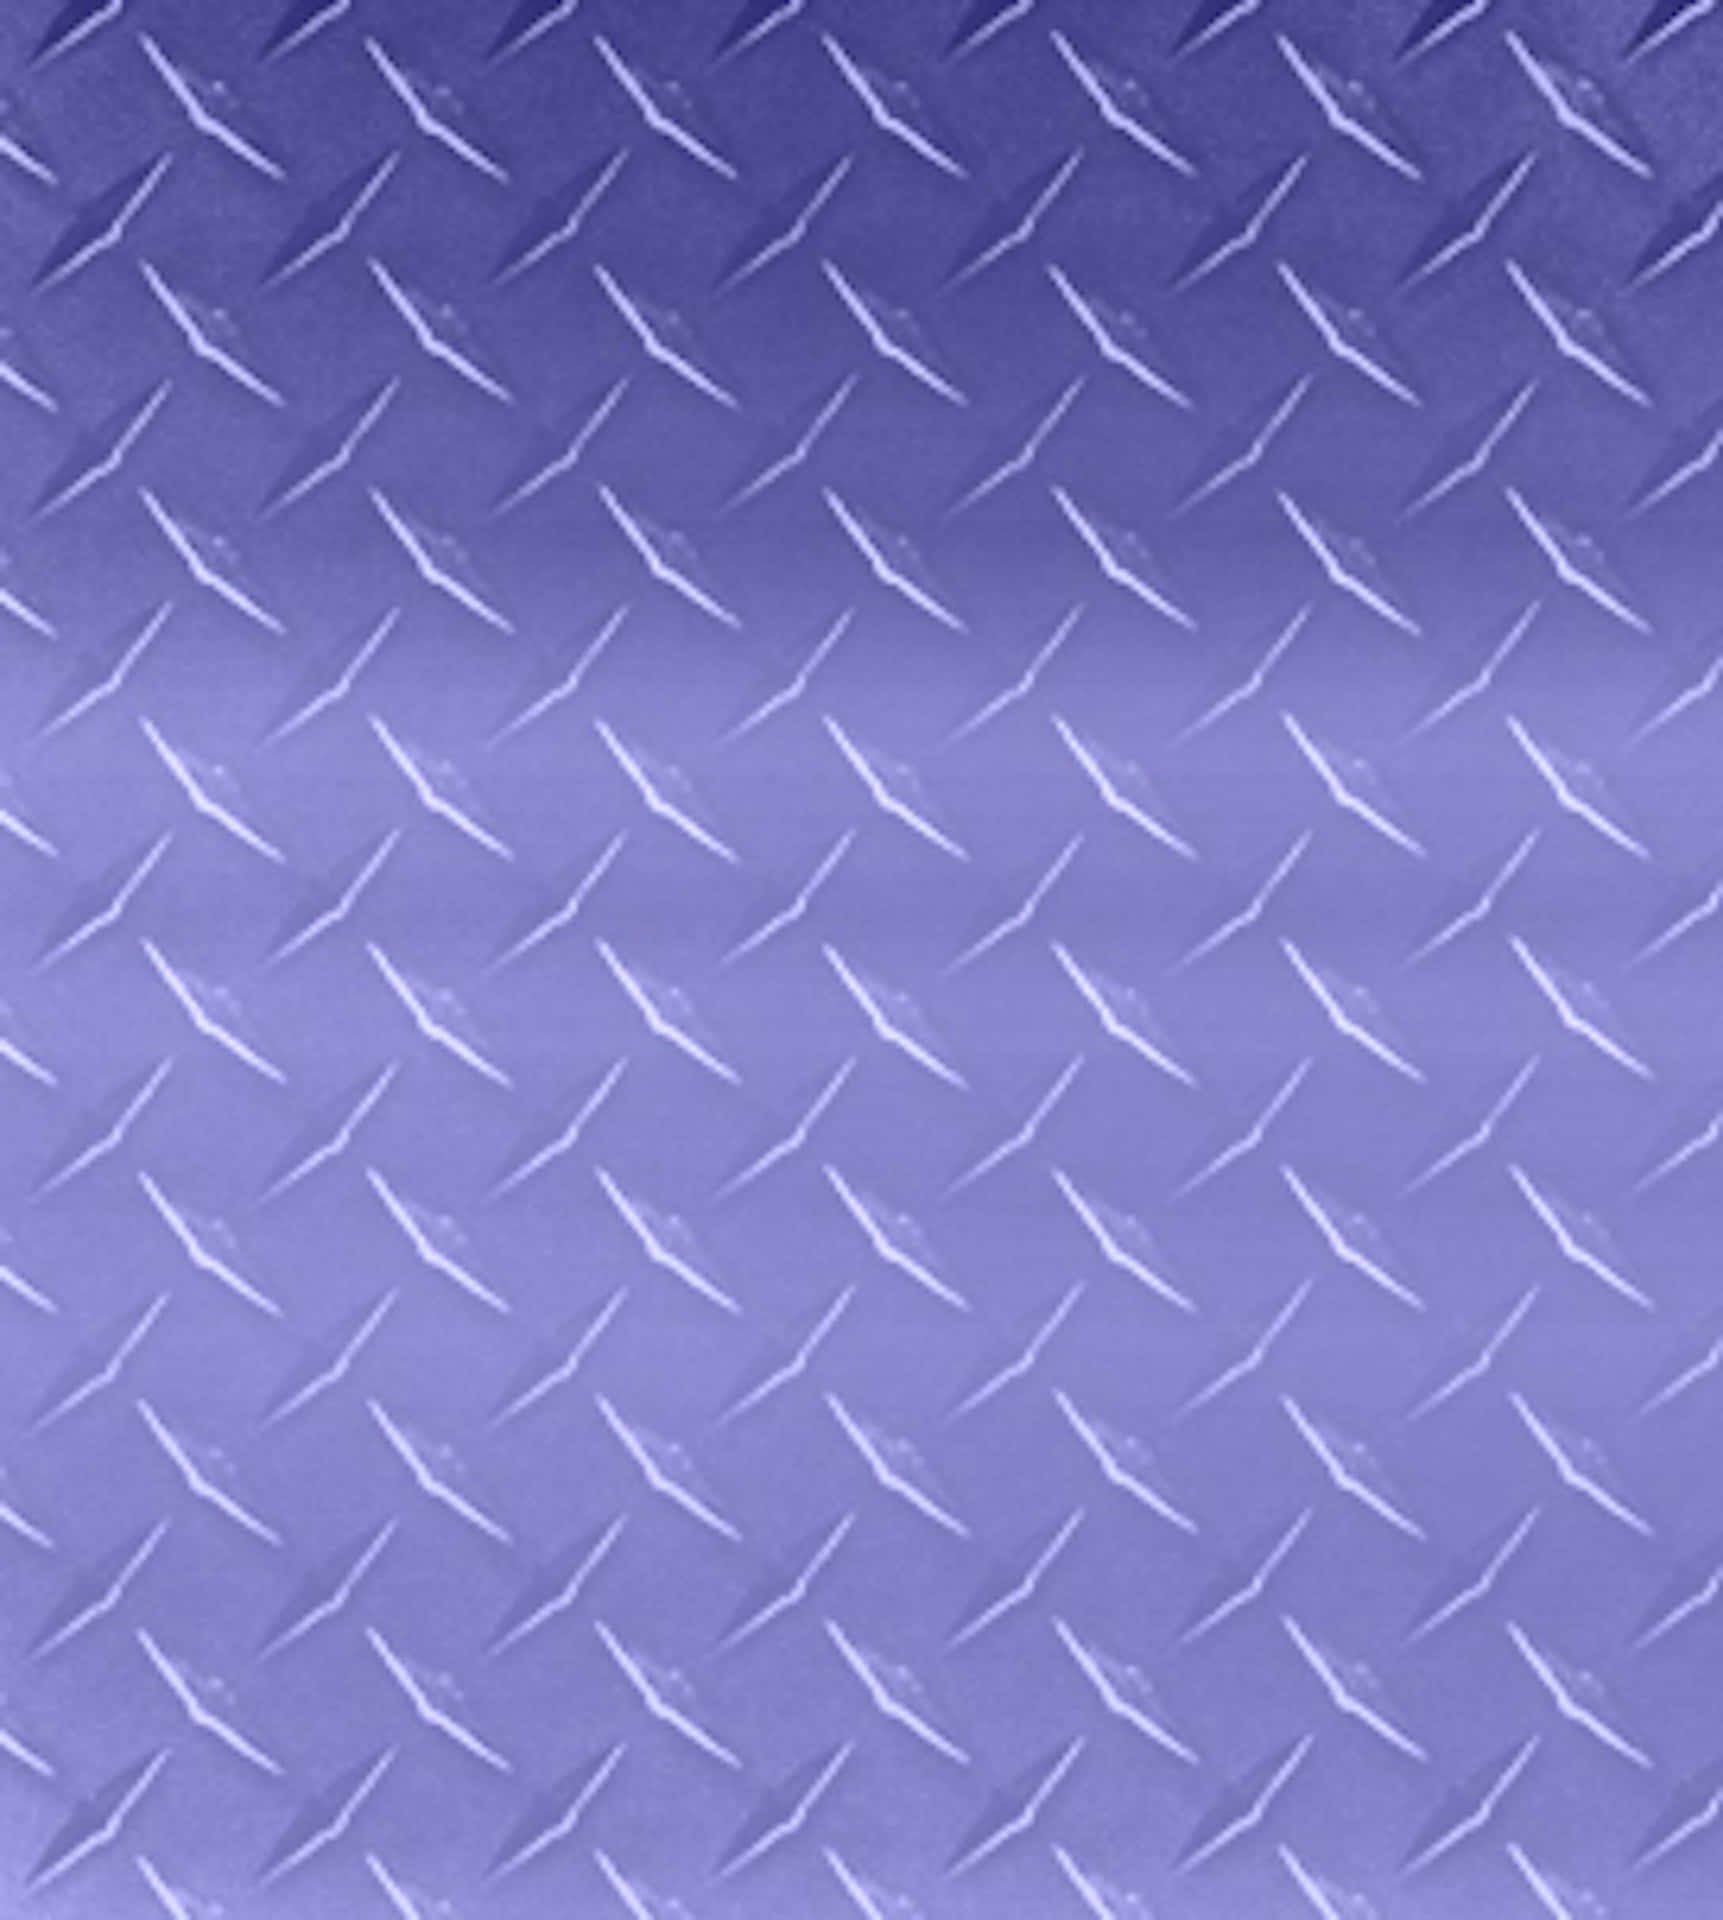 Purple Diamond Plate Backround Wallpaper